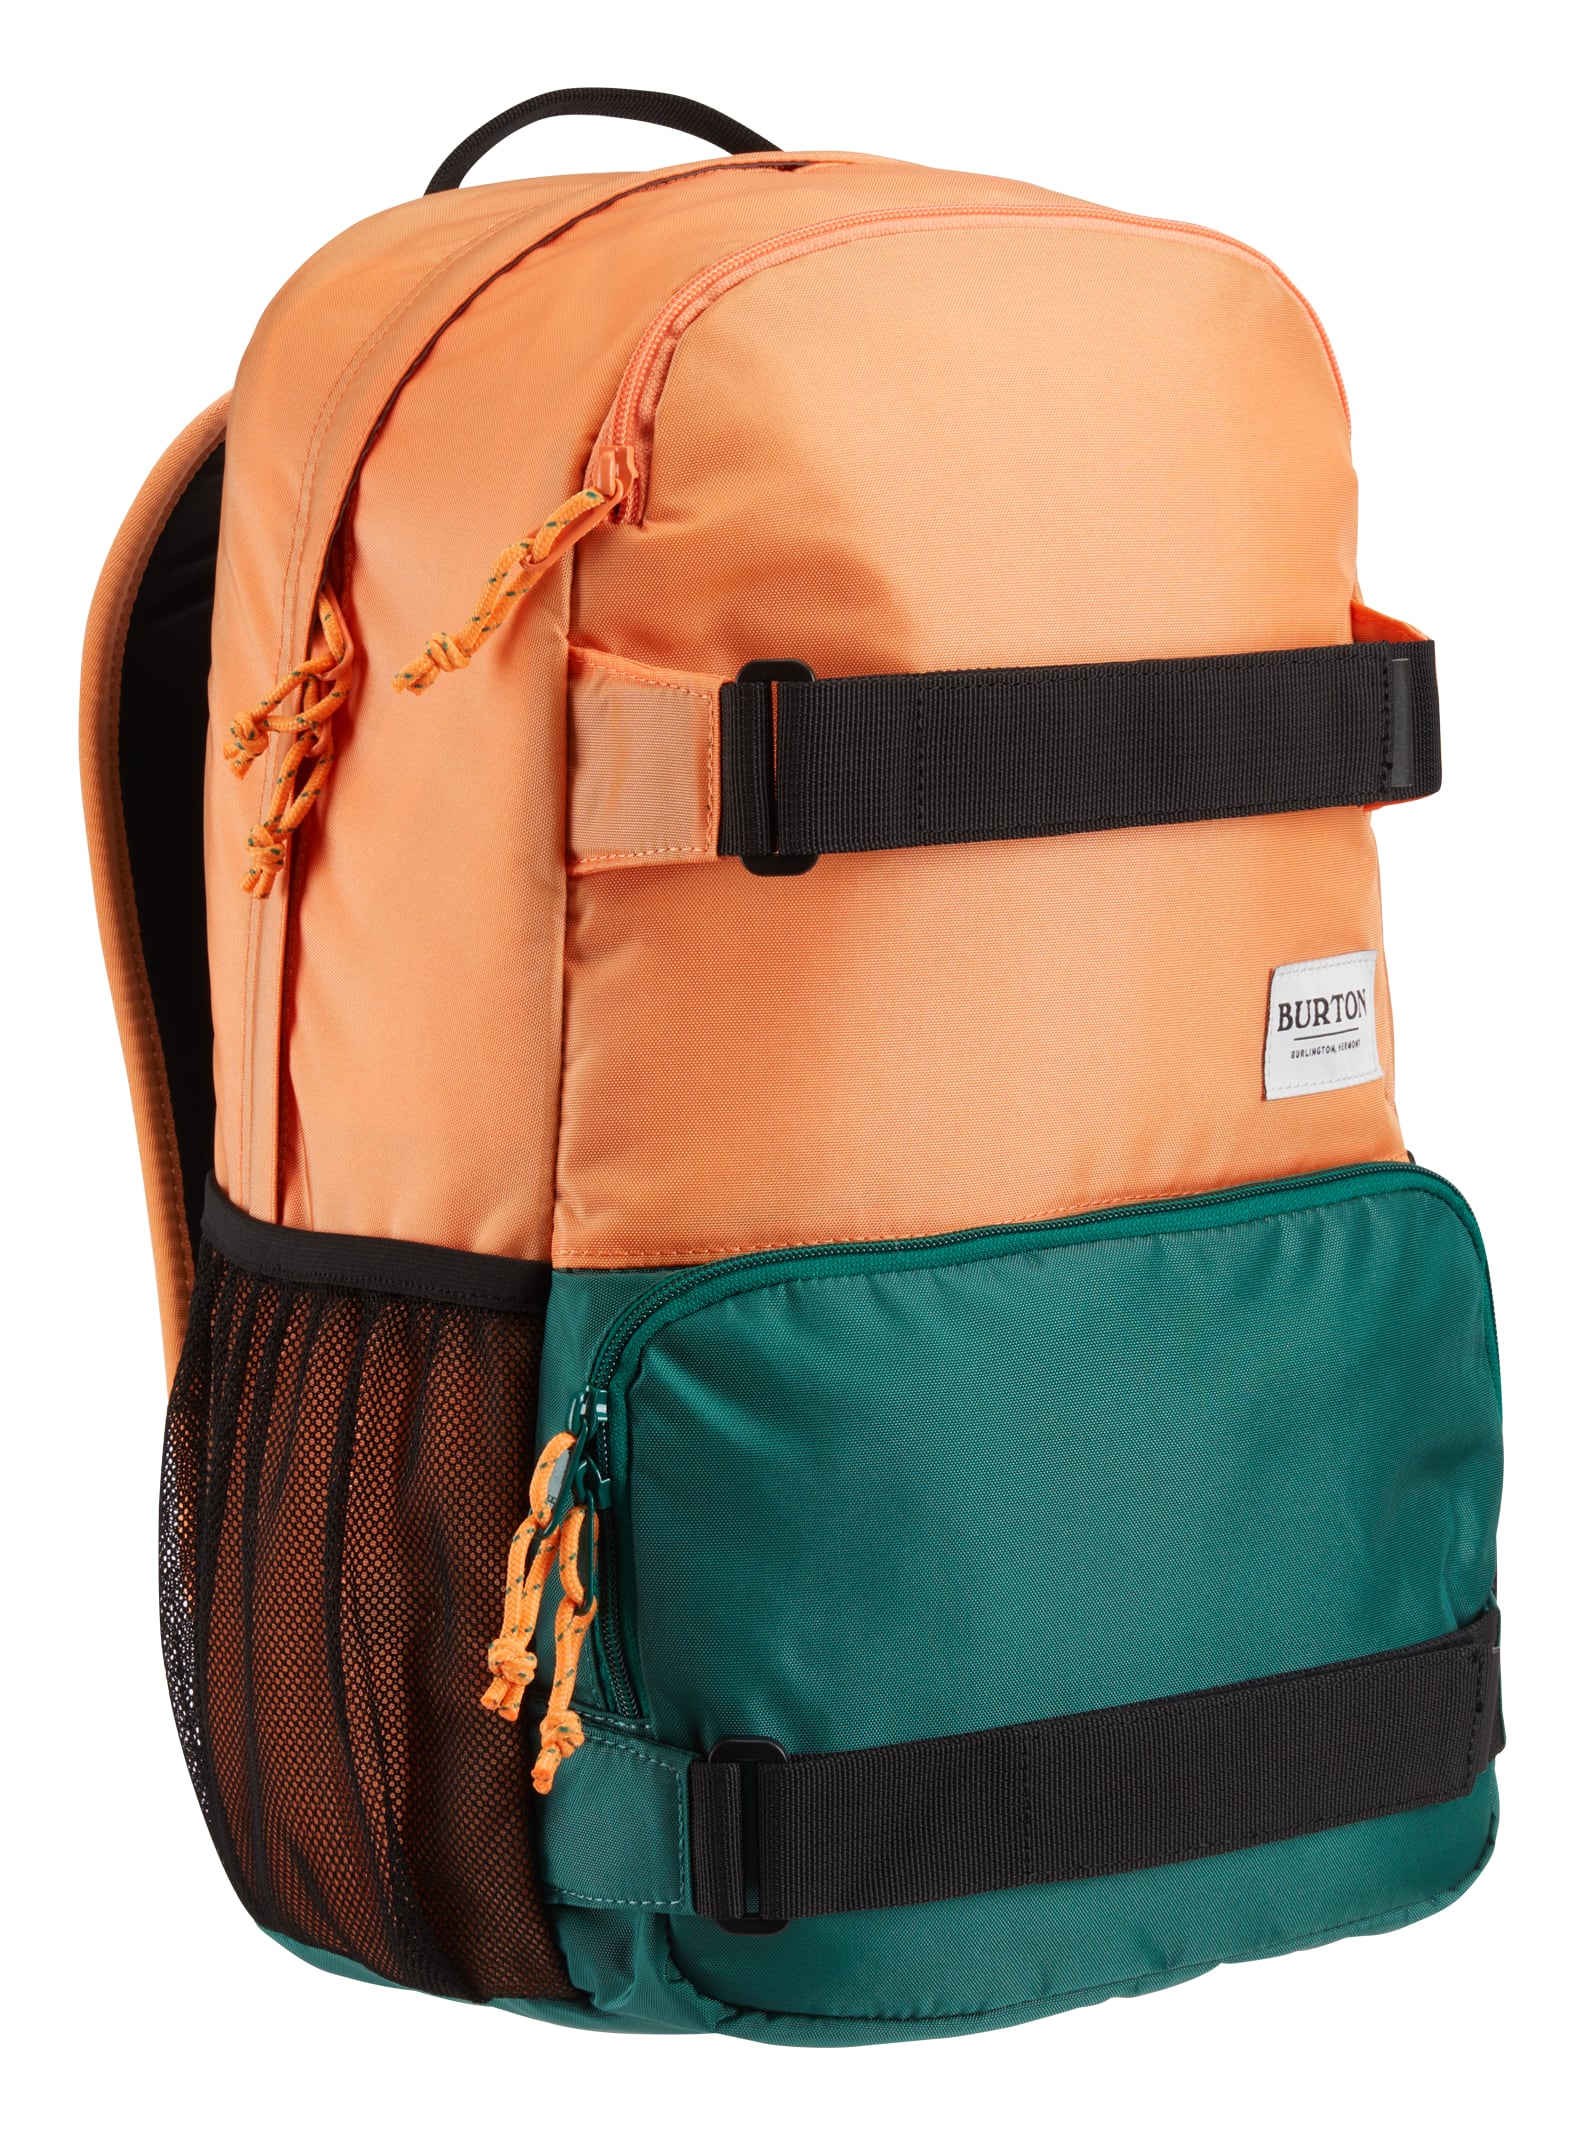 Burton Treble Yell 21L Backpack | Burton.com Spring 2021 US